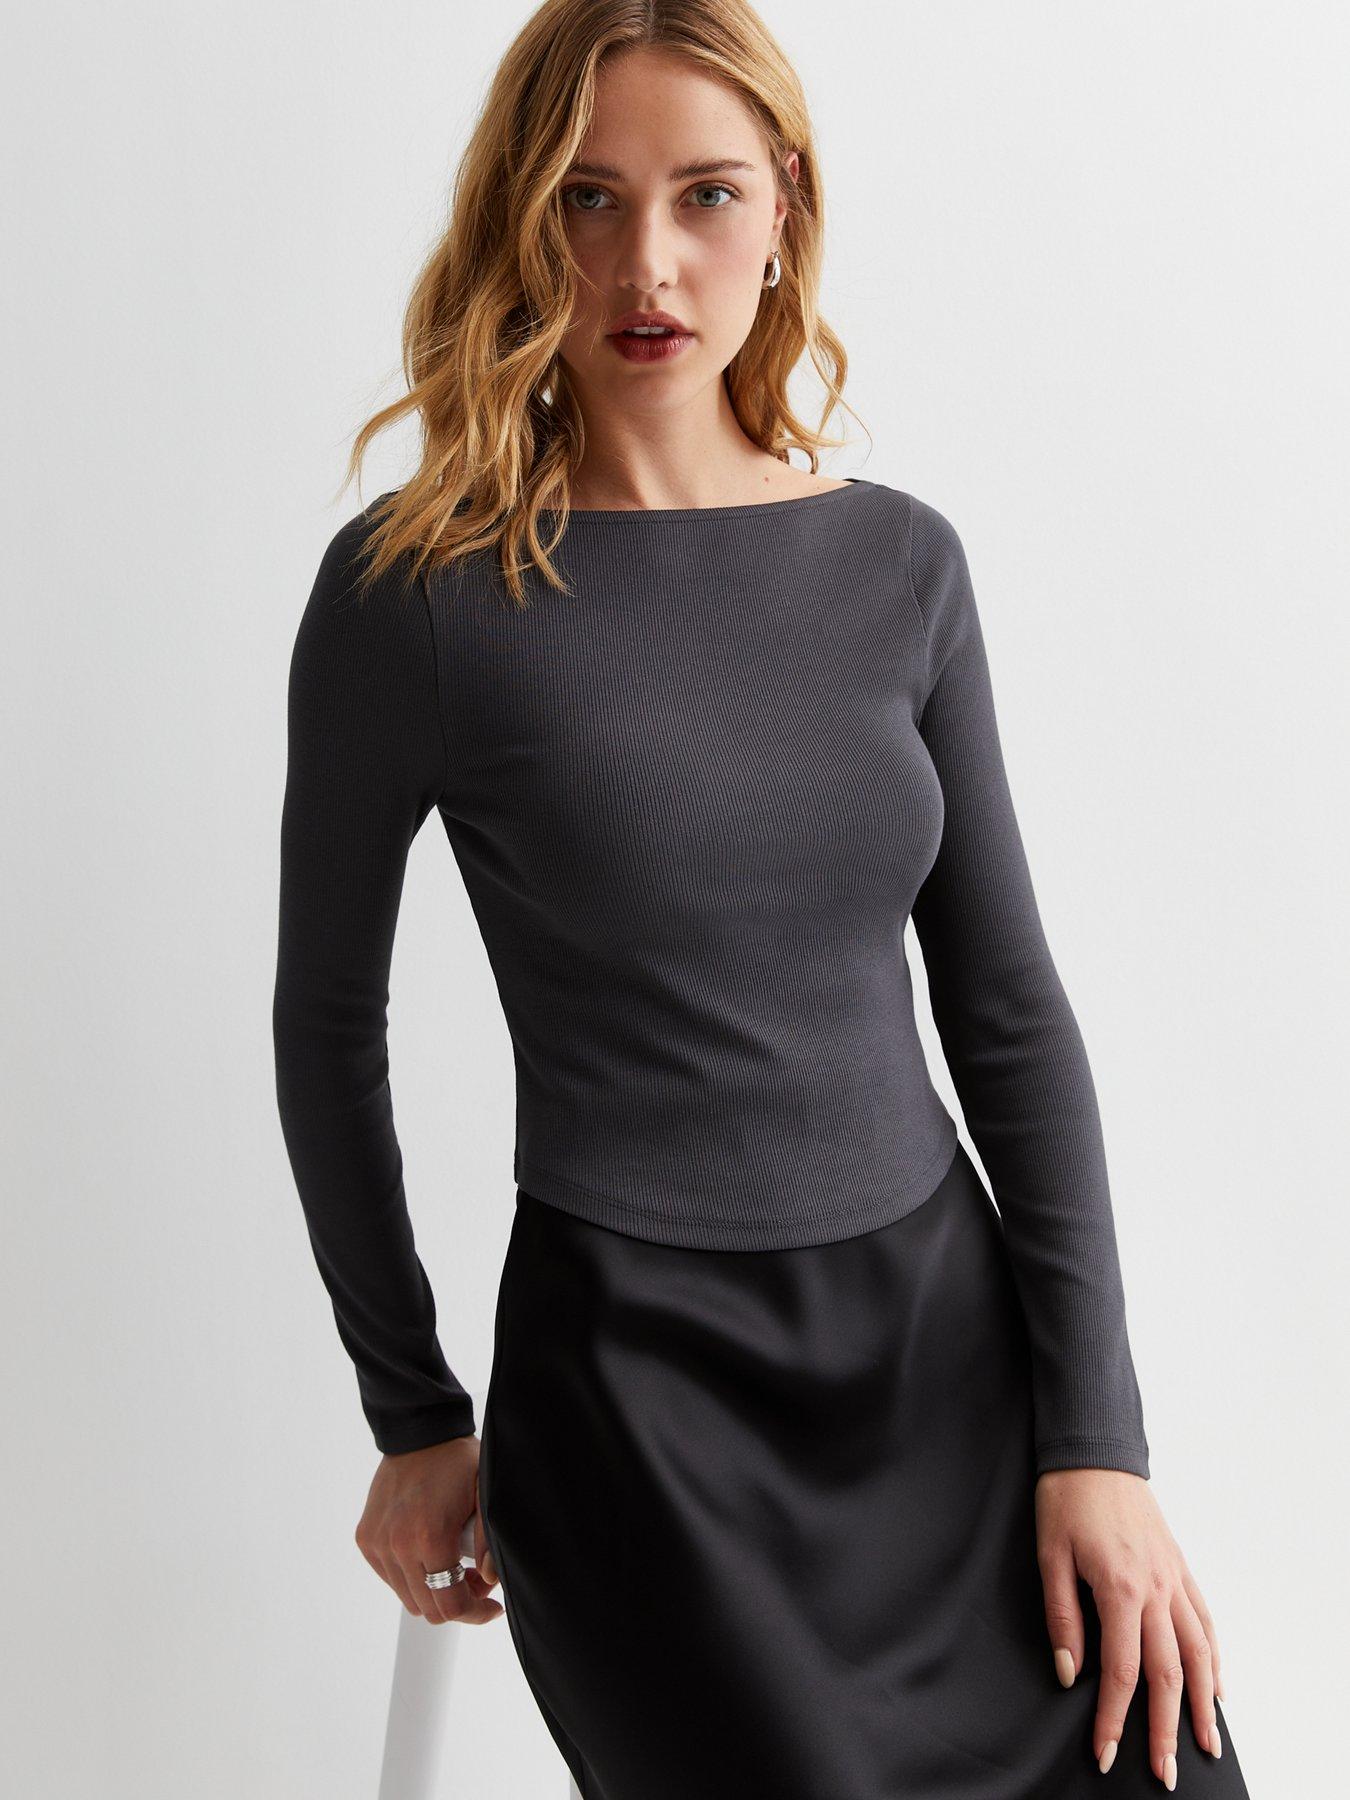 Michelle Keegan Mesh Insert Knitted Long Sleeve Top - Black